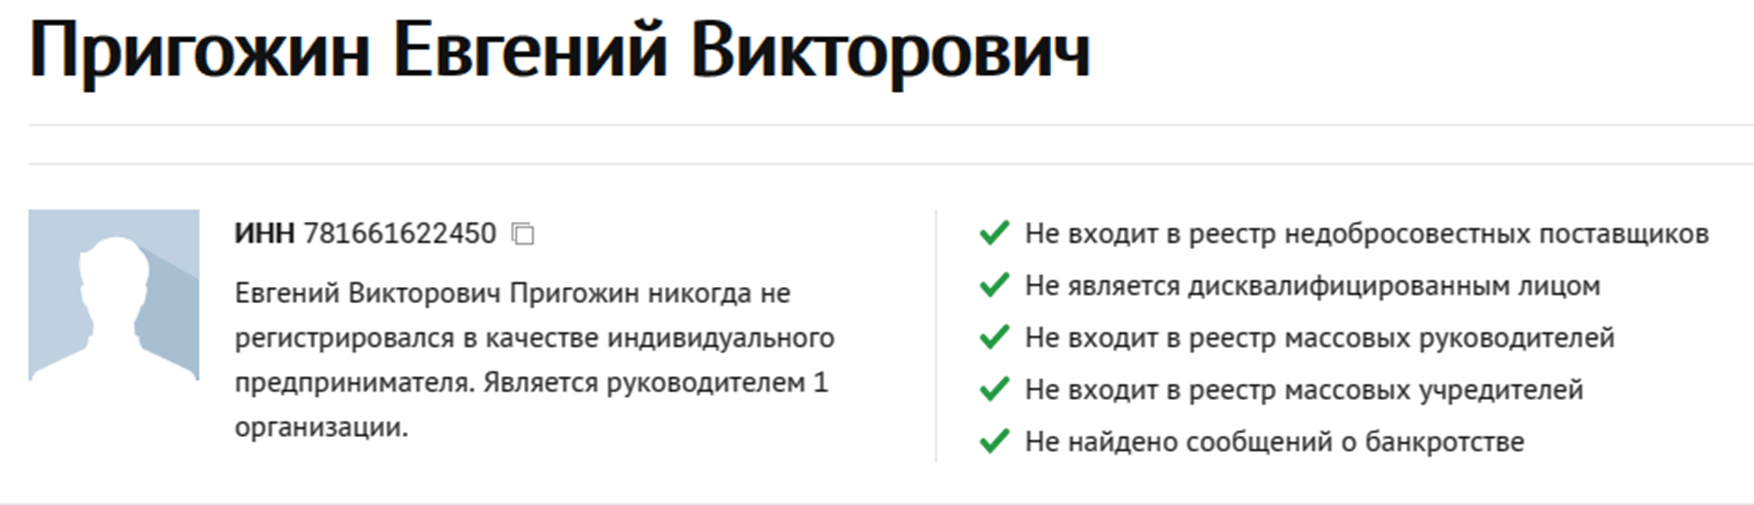 Данные ЕГРЮЛ
Скриншот checko.ru